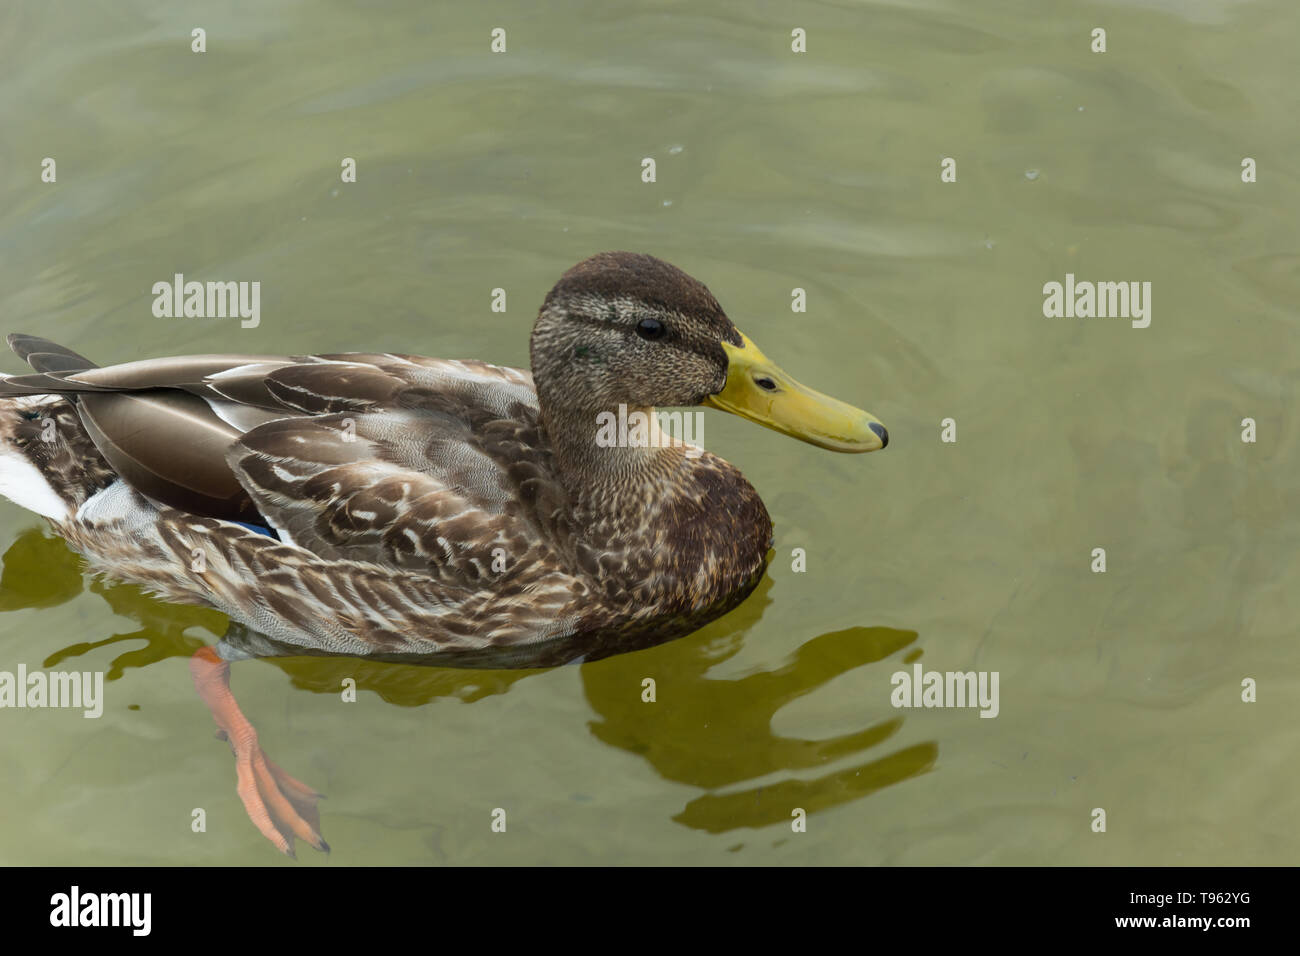 Female brown mallard duck floating in water - closeup Stock Photo